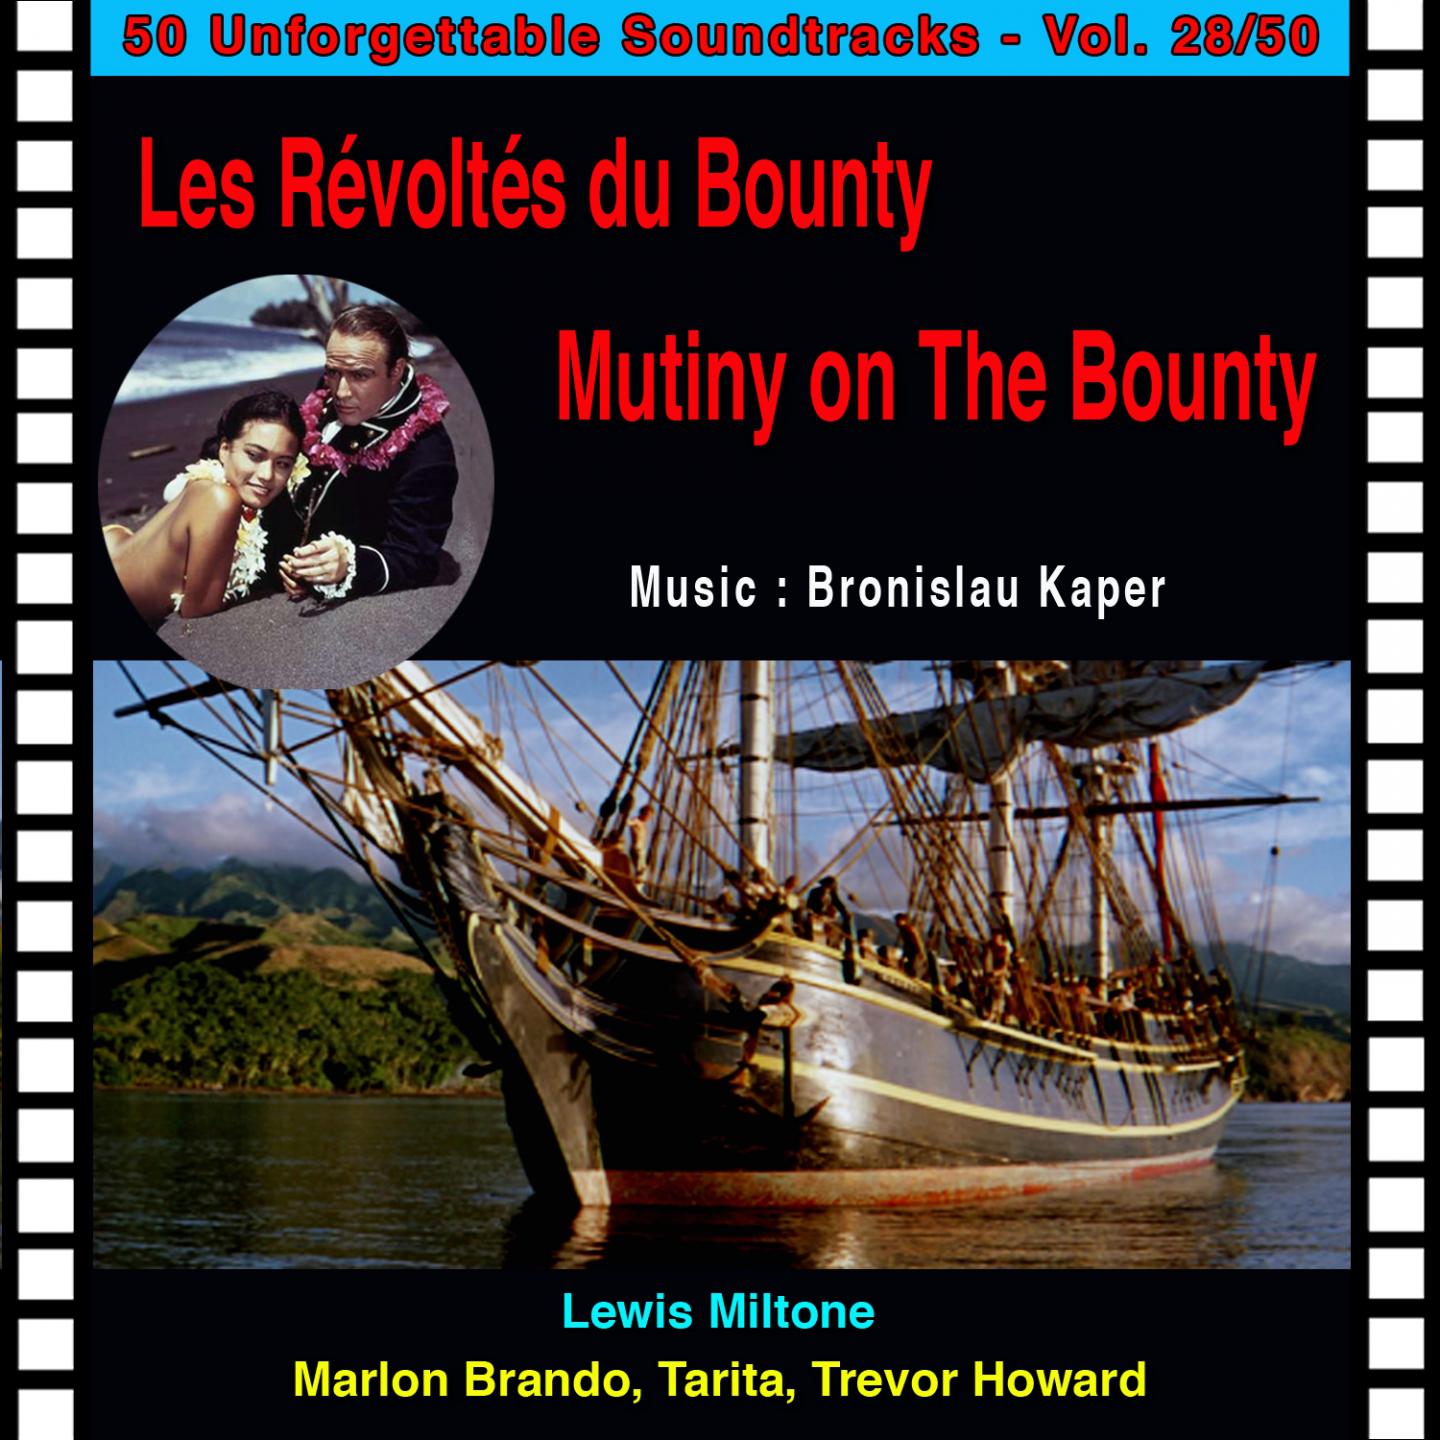 Portsmouth Harbor Les Re volte s Du Bounty  Mutiny on the Bounty